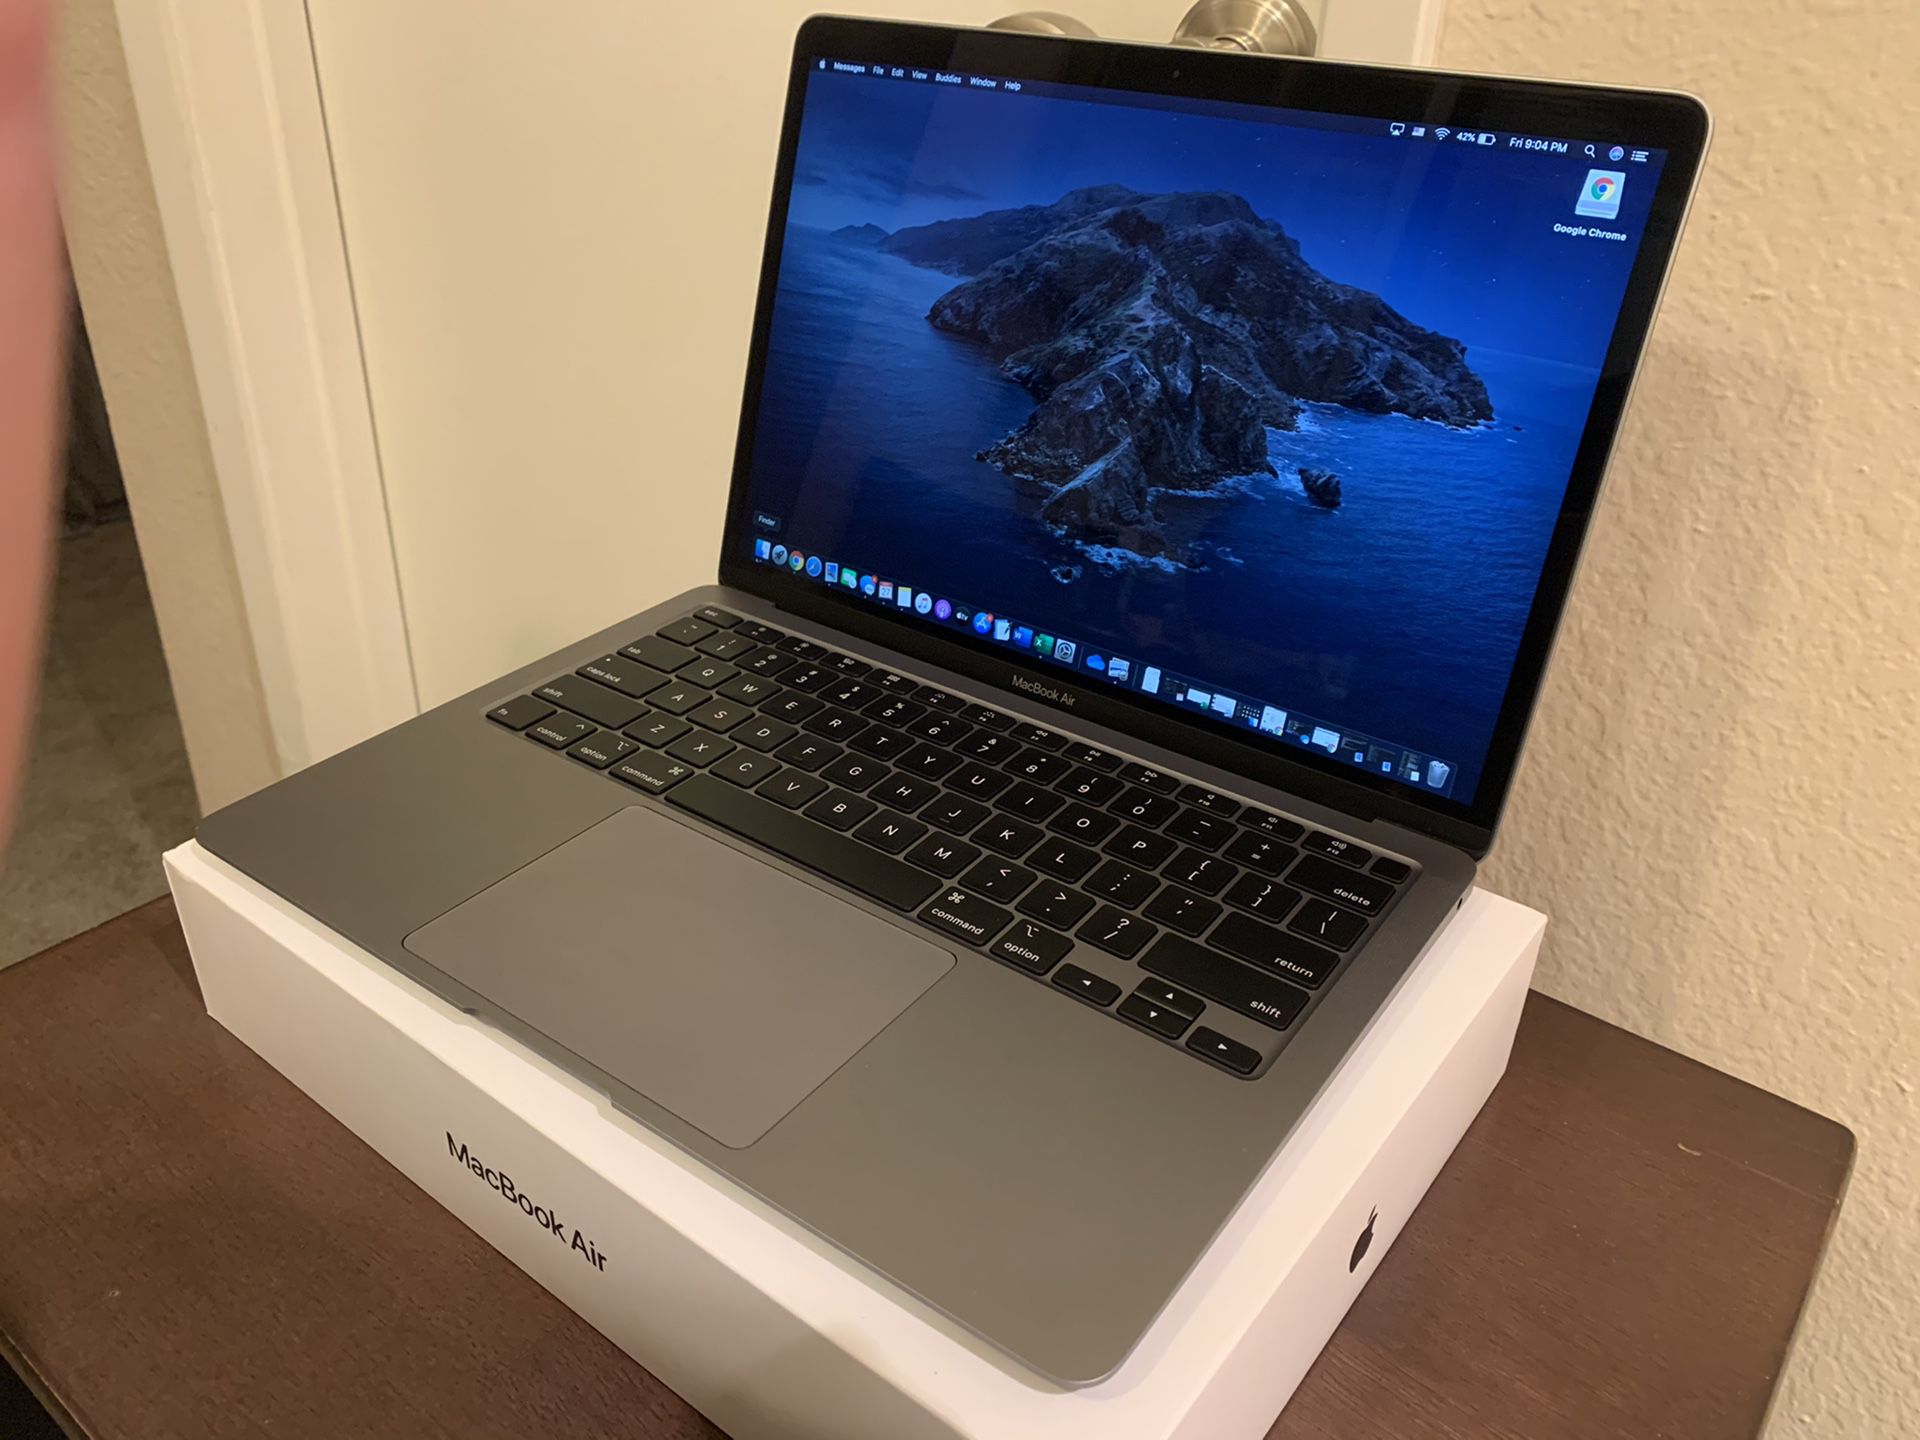 MacBook Air 13-inch (2020)